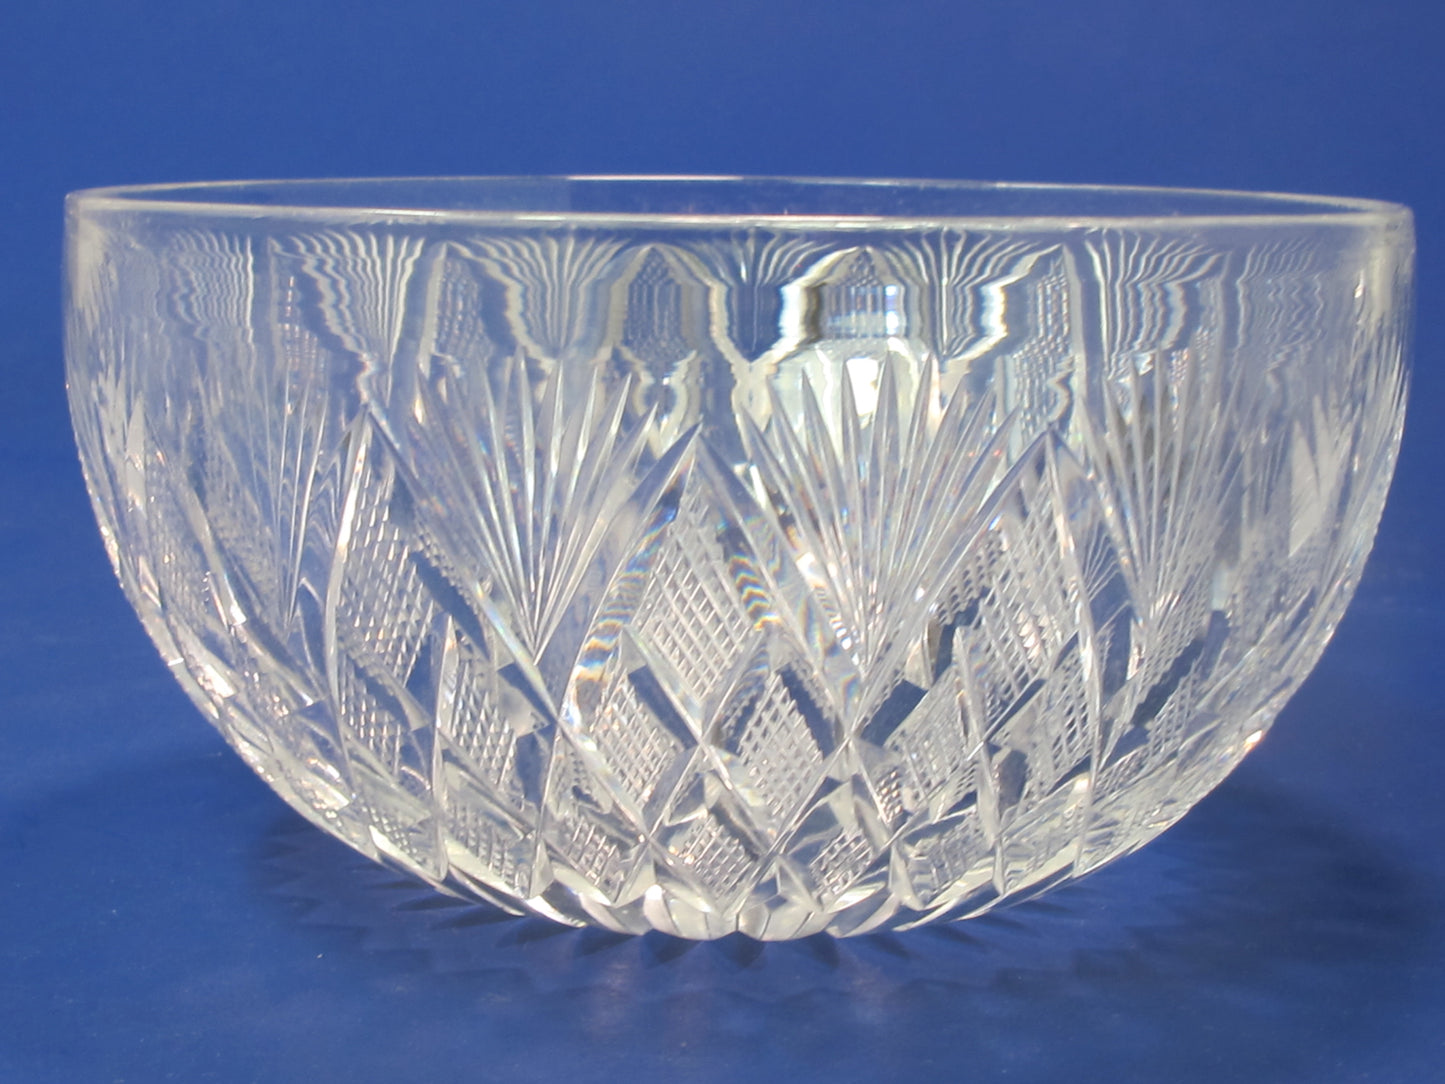 Antique Cut Glass finger bowl American Brilliant period, ABP mouth blown